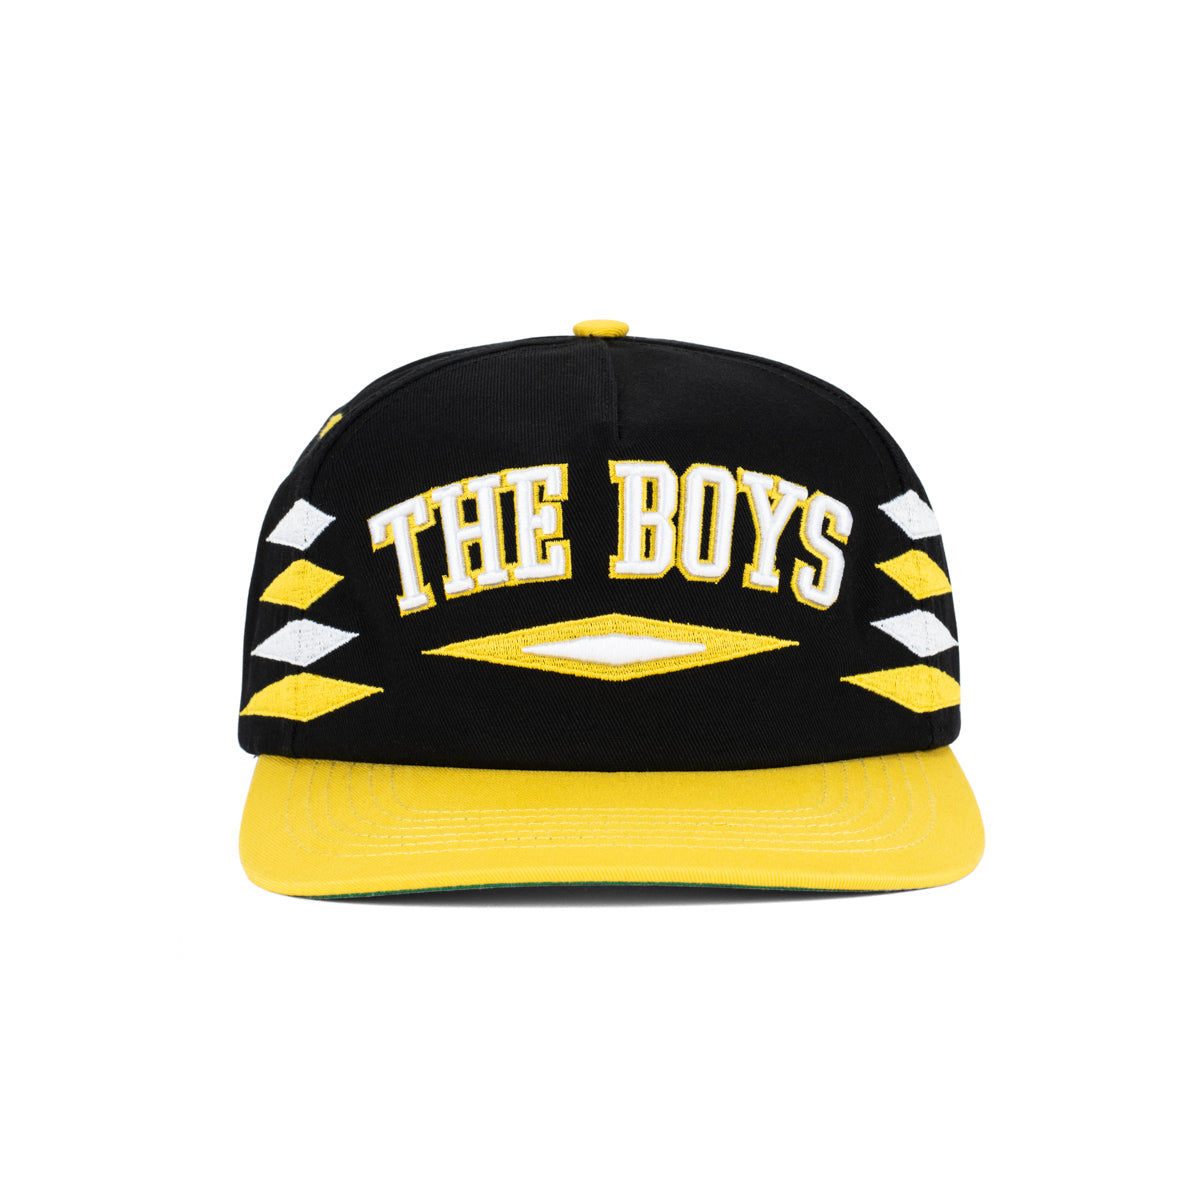 The Boys Diamond Retro Hat-Hats-Bussin With The Boys-Black/Yellow-Barstool Sports